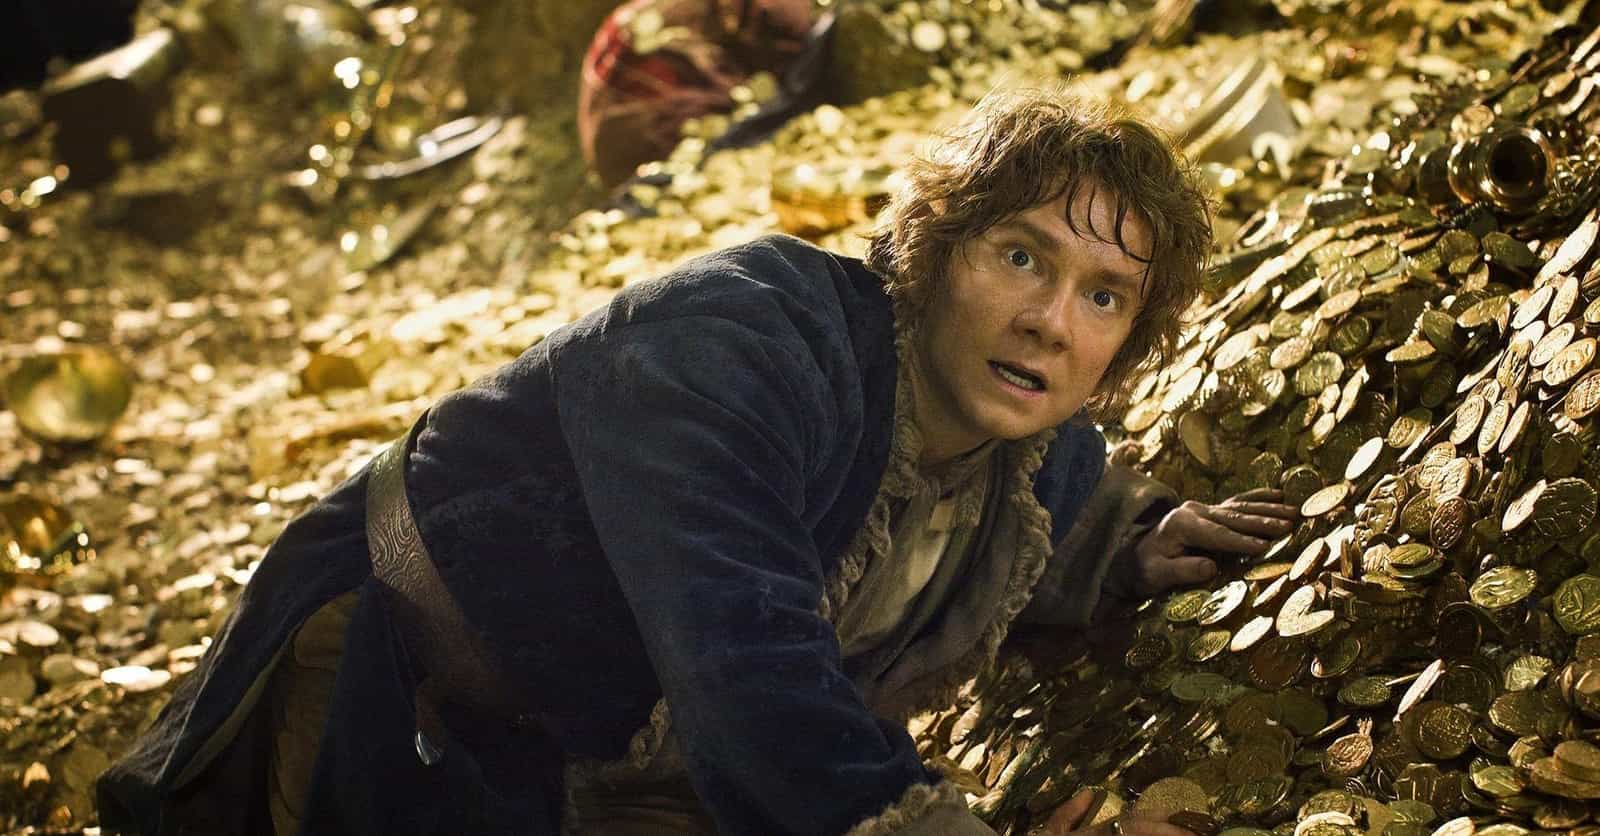 18 Bilbo Baggins Quotes That Prove He's The Best Hobbit